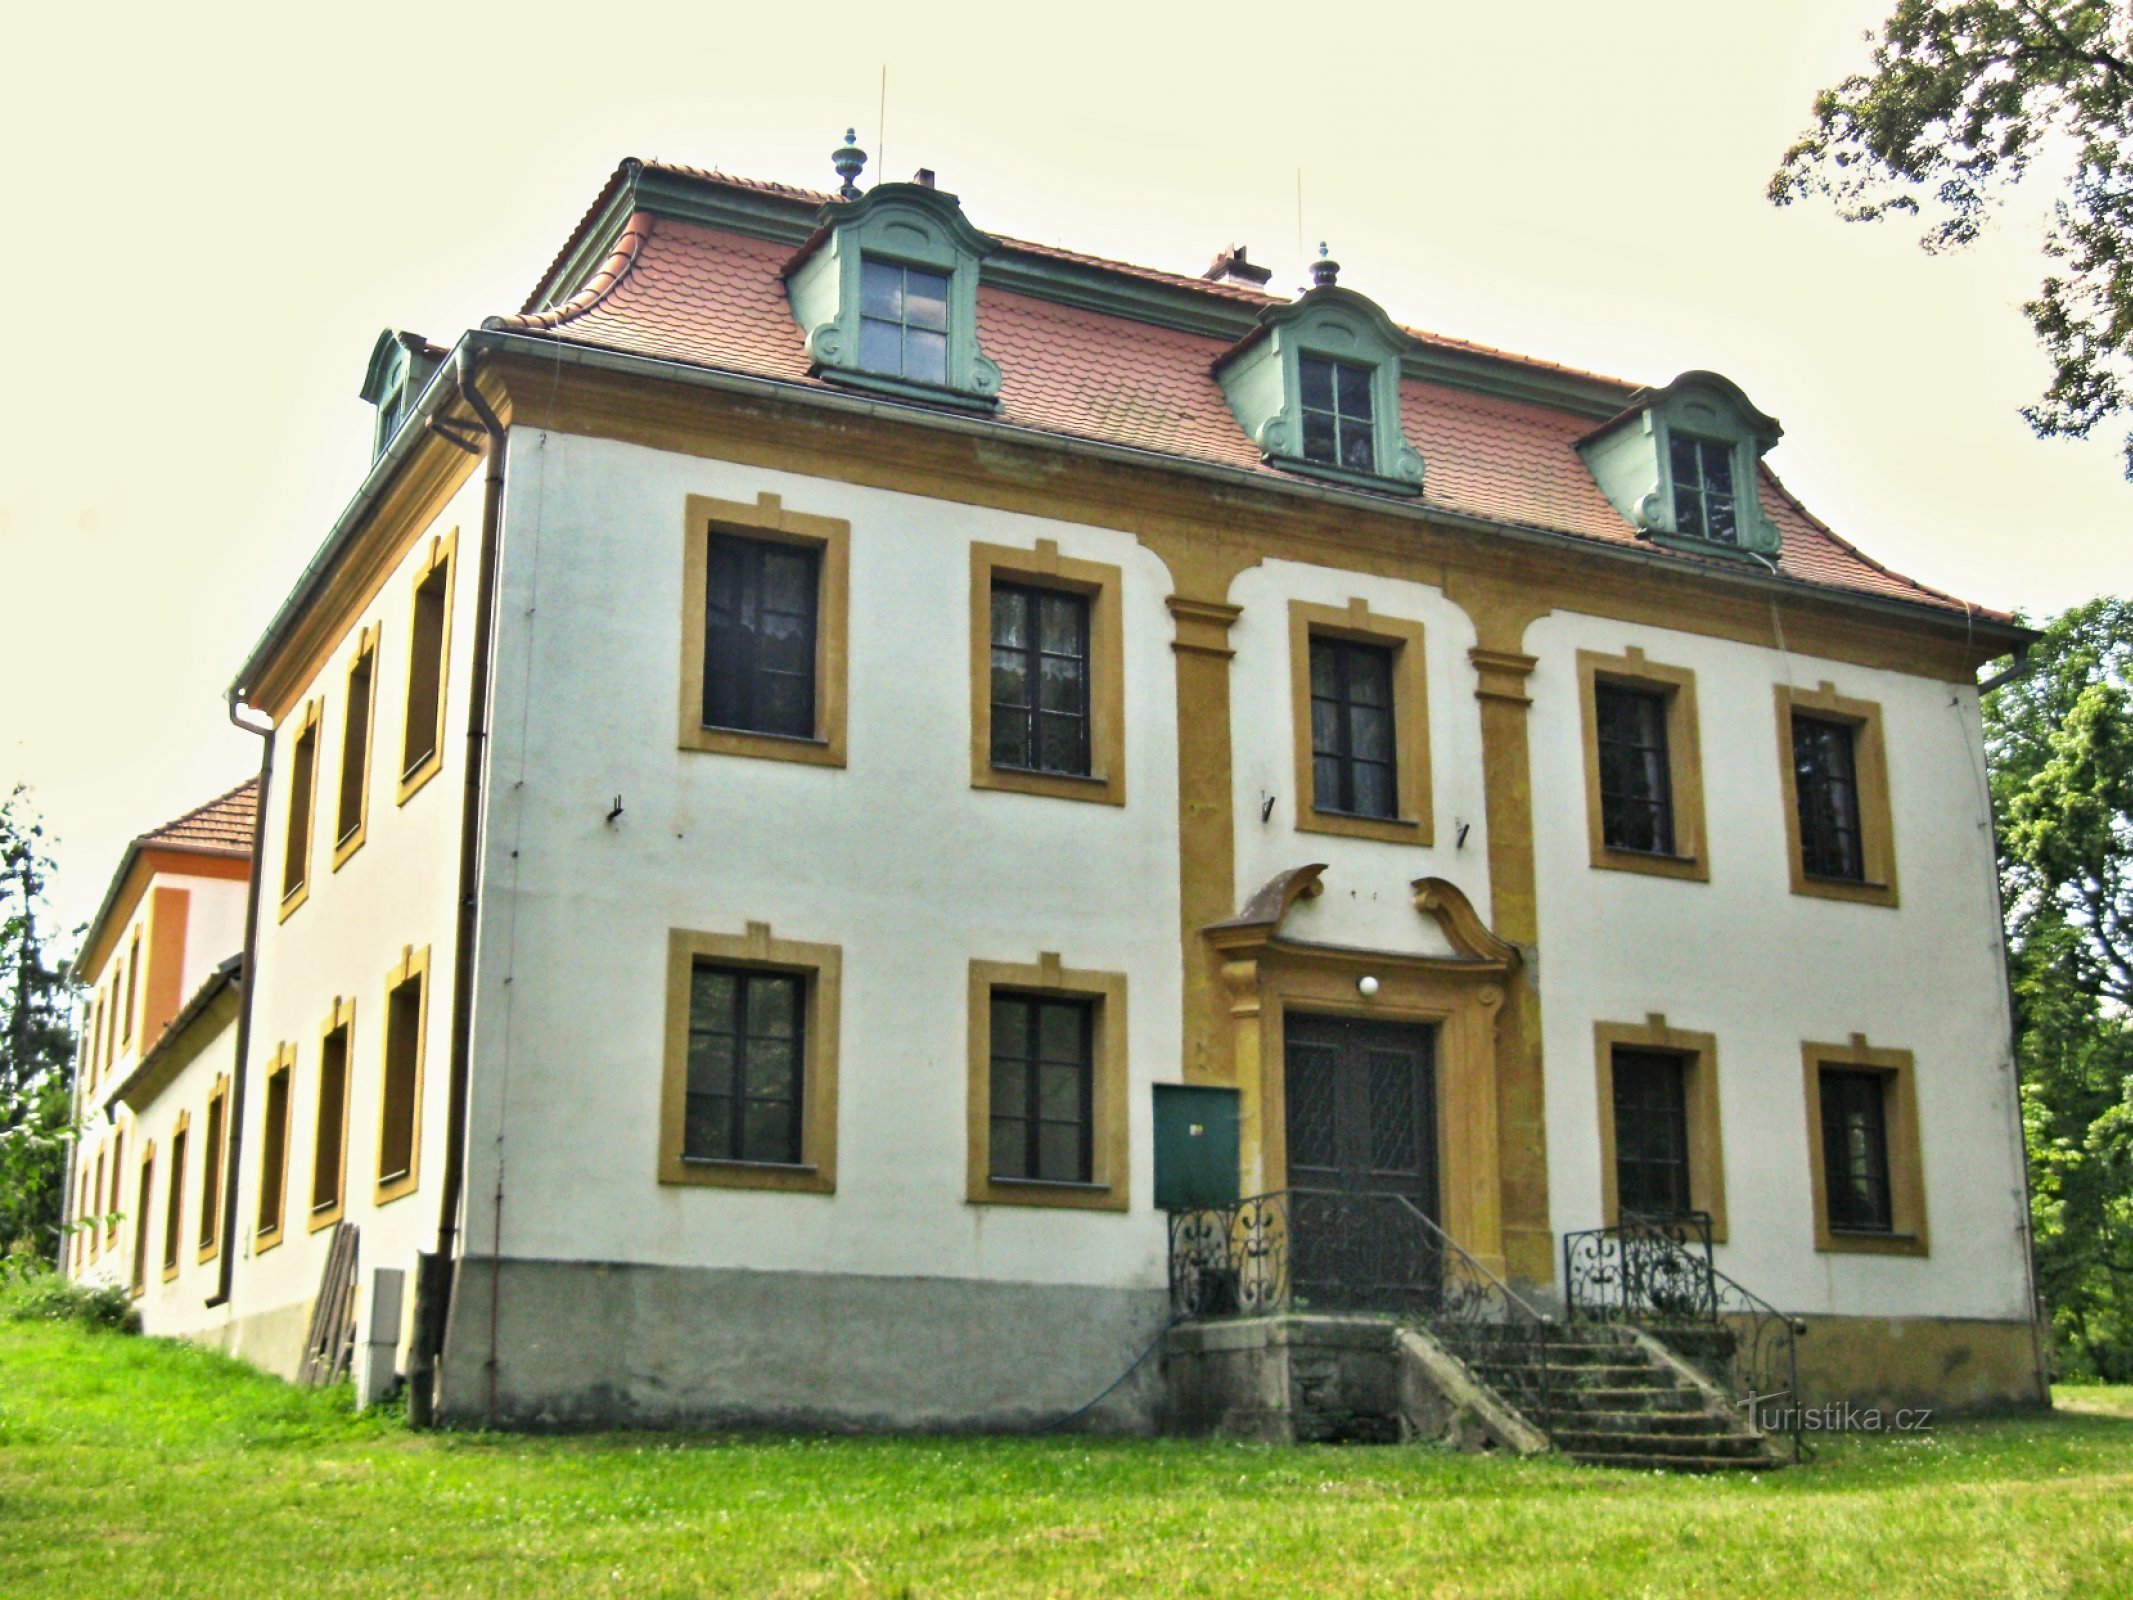 Silvicultură Bouzov - Jägerhaus